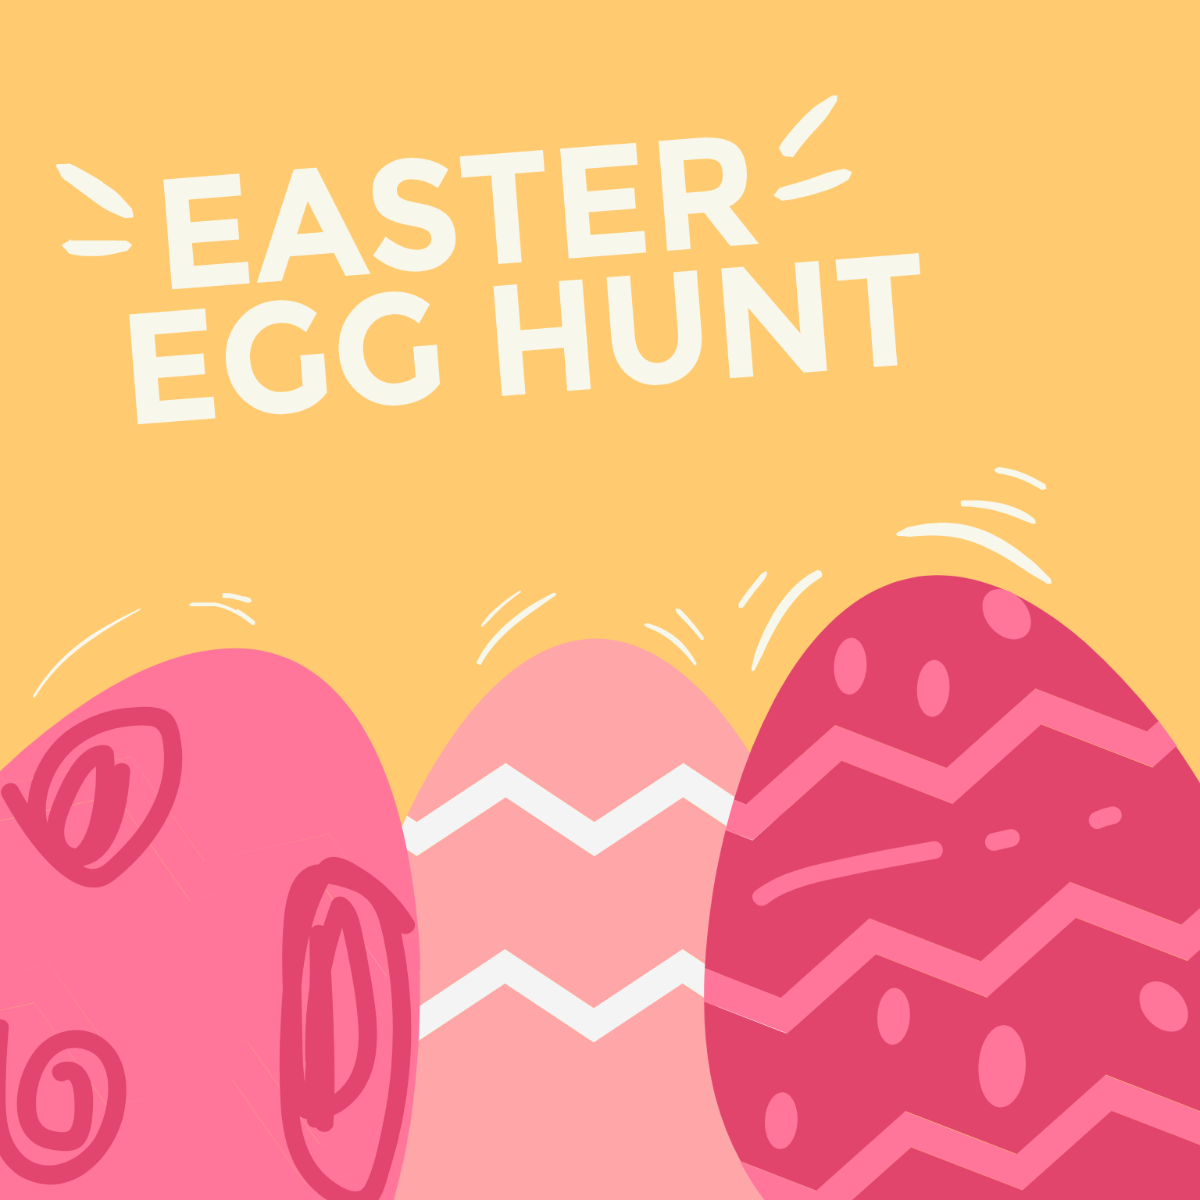 Free Easter Egg Hunt Vector Template